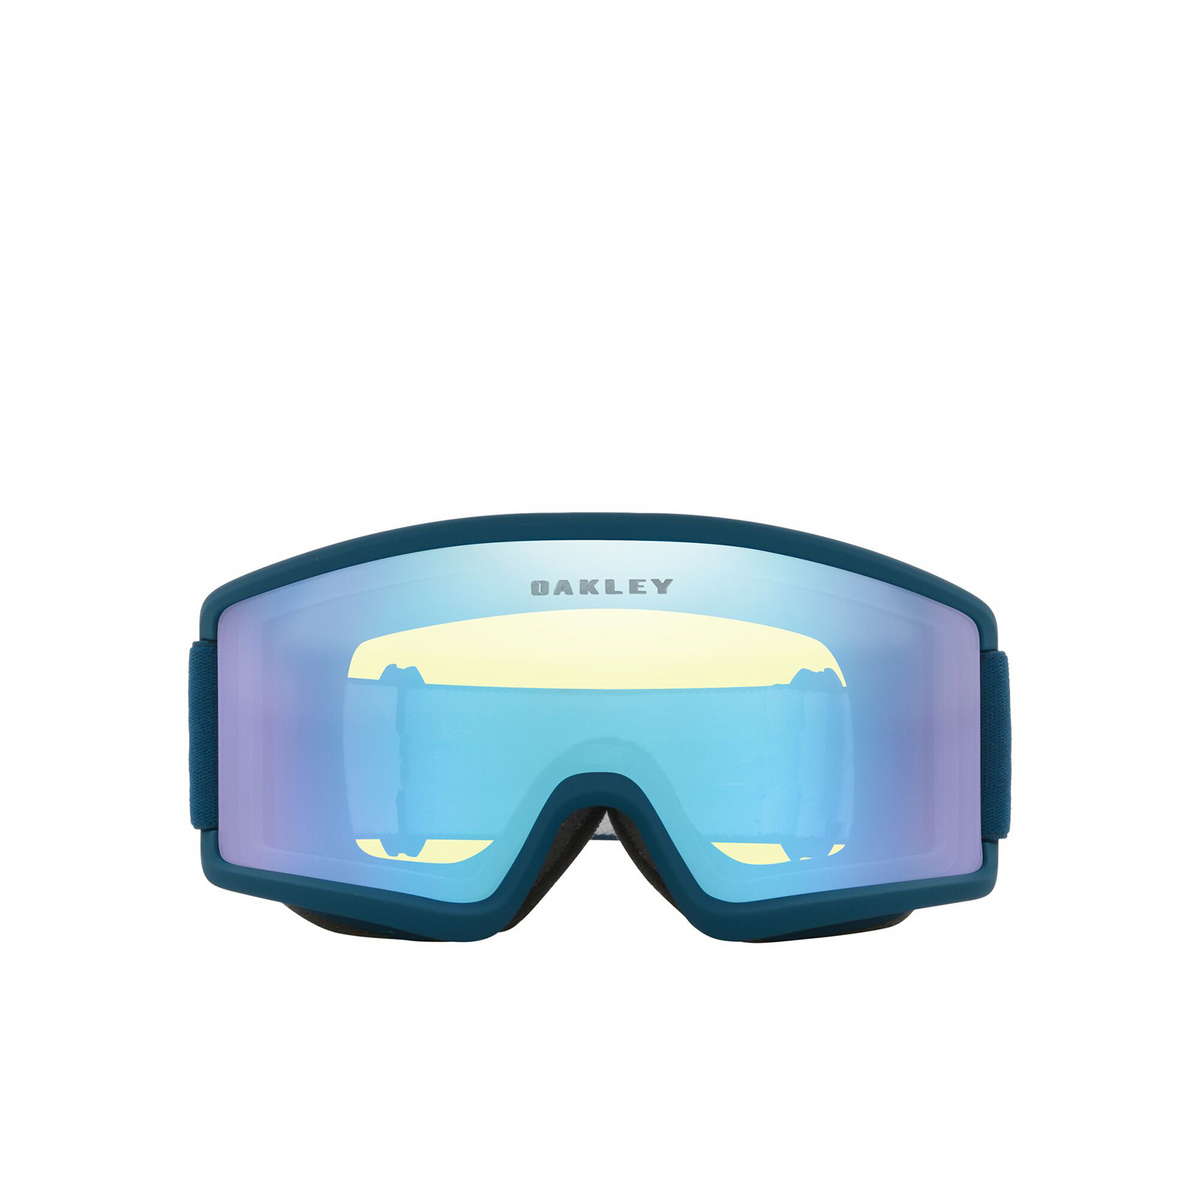 Oakley TARGET LINE S Sunglasses 712210 Poseidon - front view